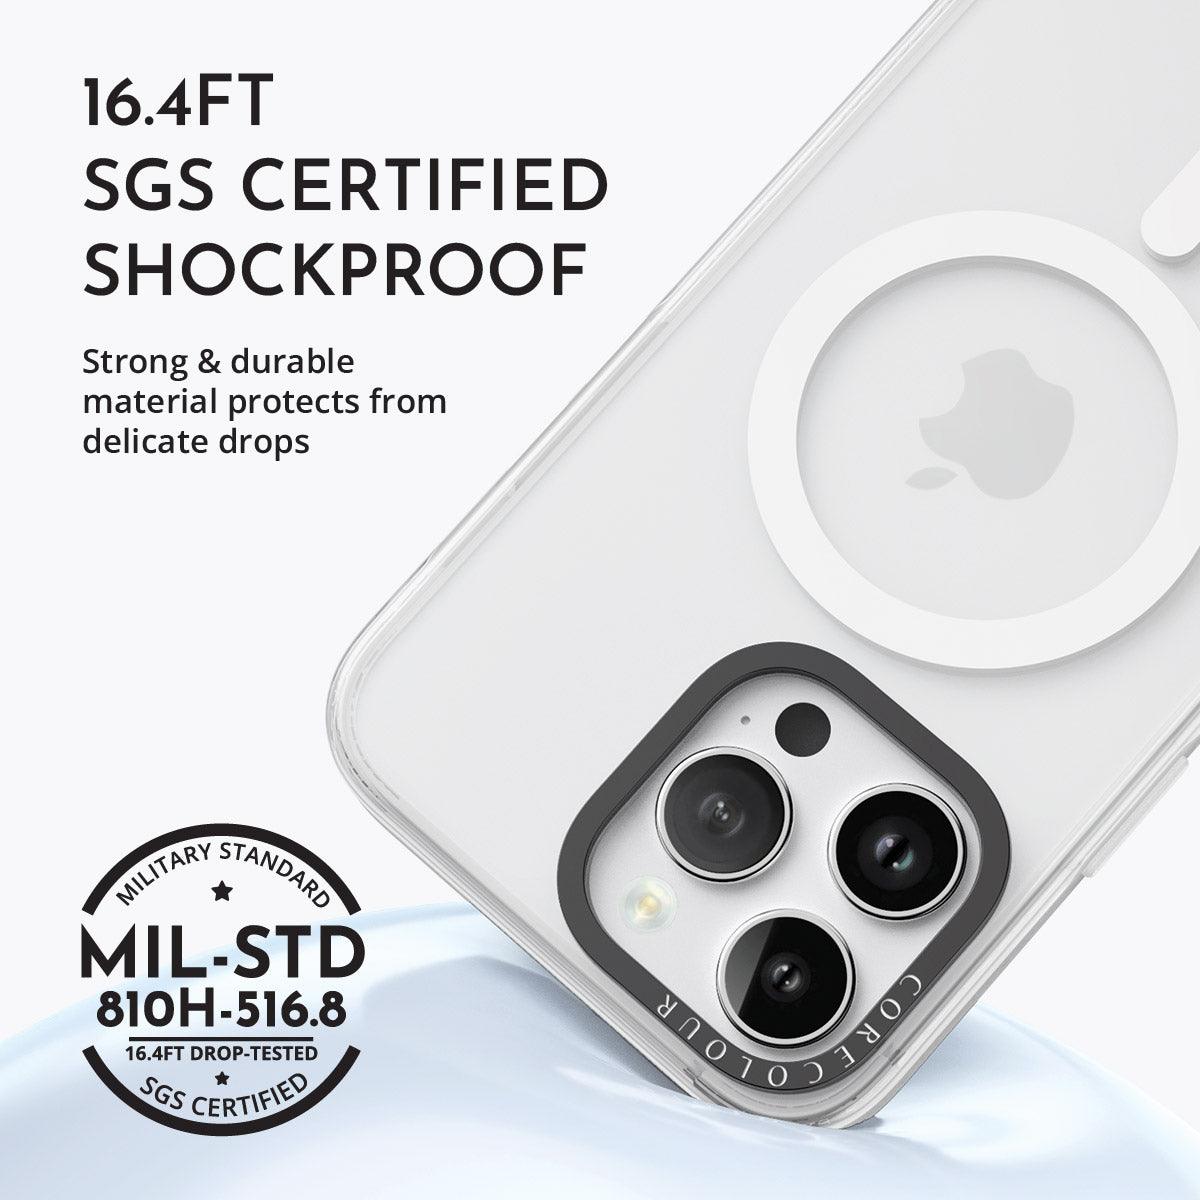 iPhone 13 Pro Max Iridescent Glitter Phone Case MagSafe Compatible - CORECOLOUR AU